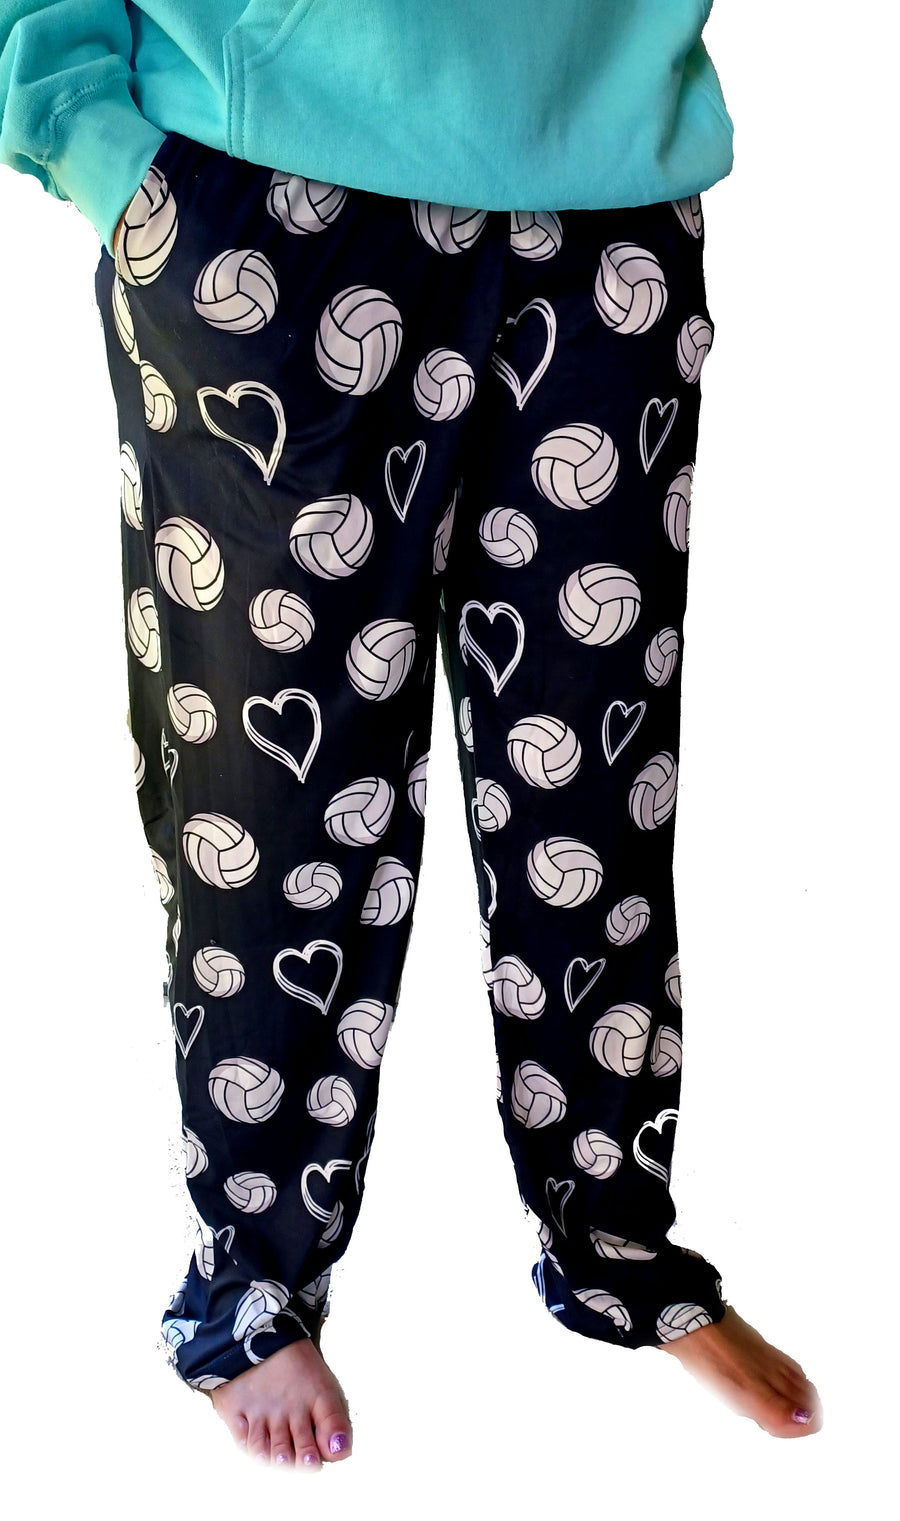 Women's Pajama Pants Blue & Gray Hearts Print Relaxed Lounge Pants